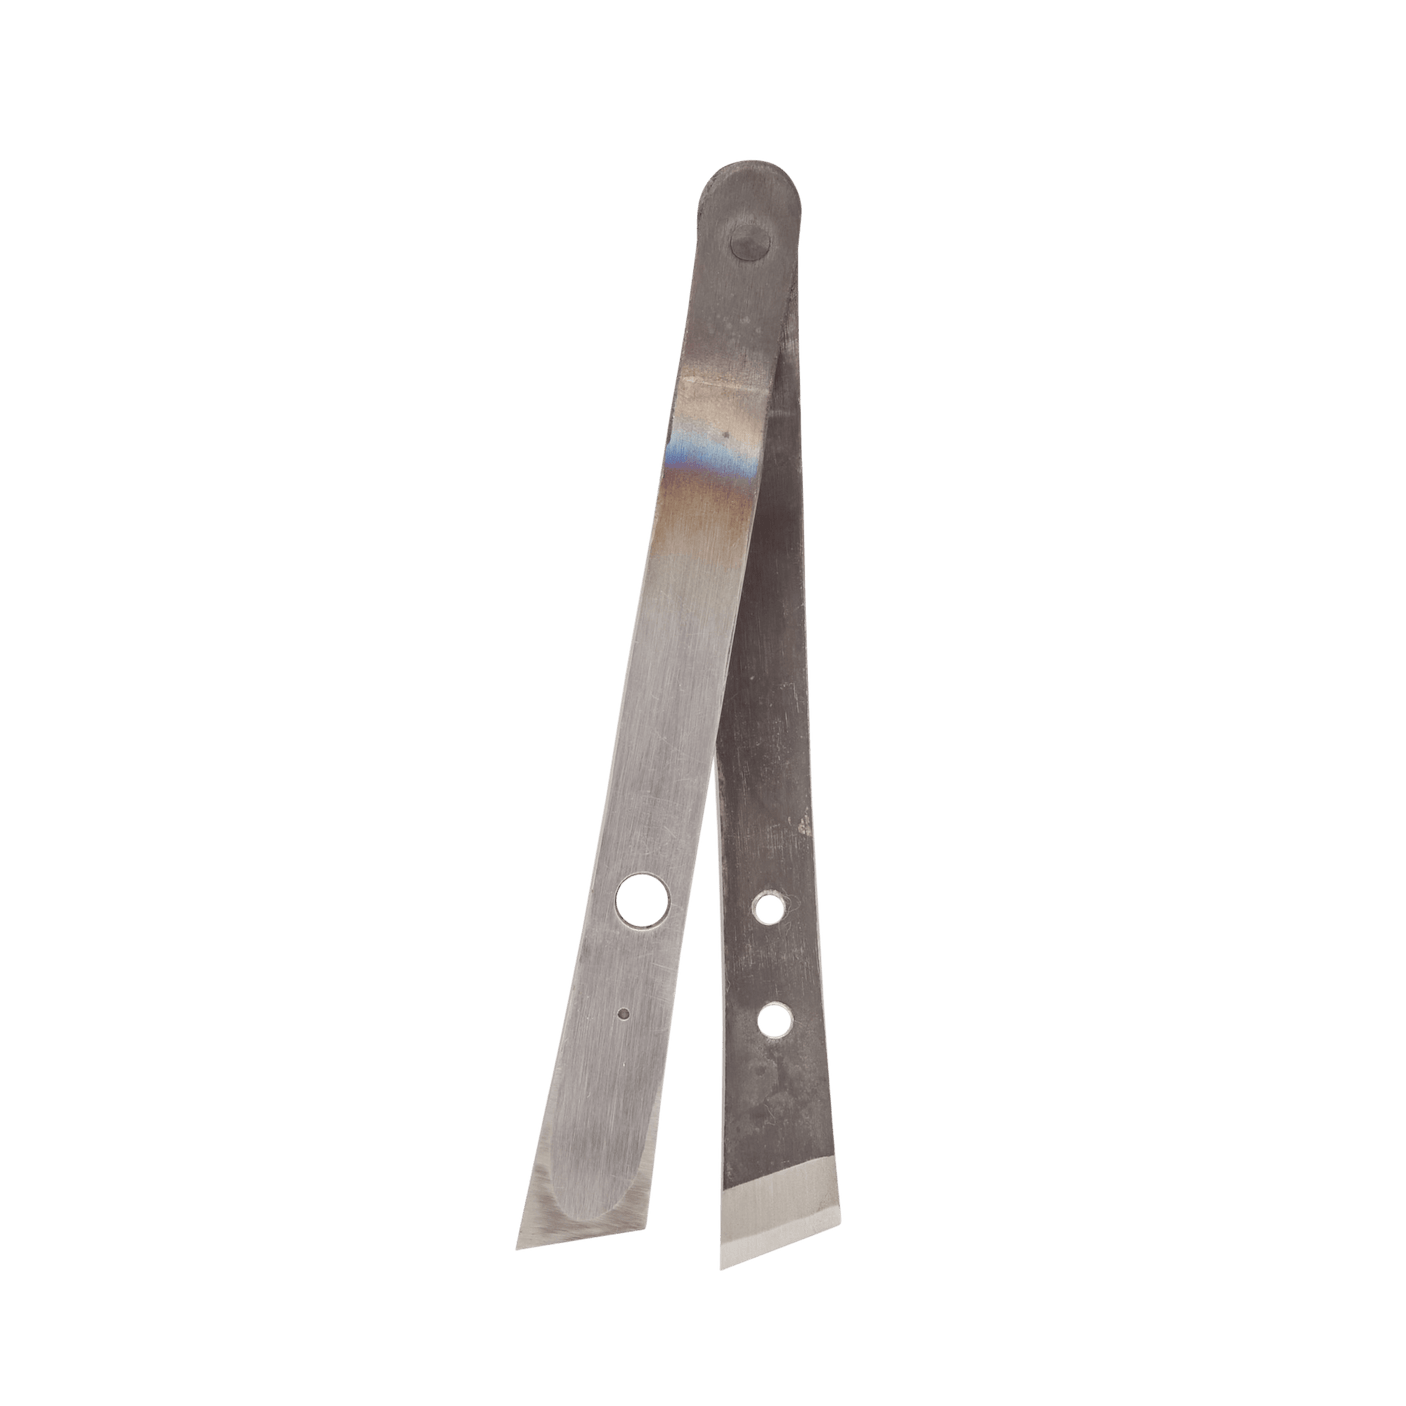 Baishinshi Double Marking Knife - 2 Screws - Marking Knives - Japanese Tools Australia